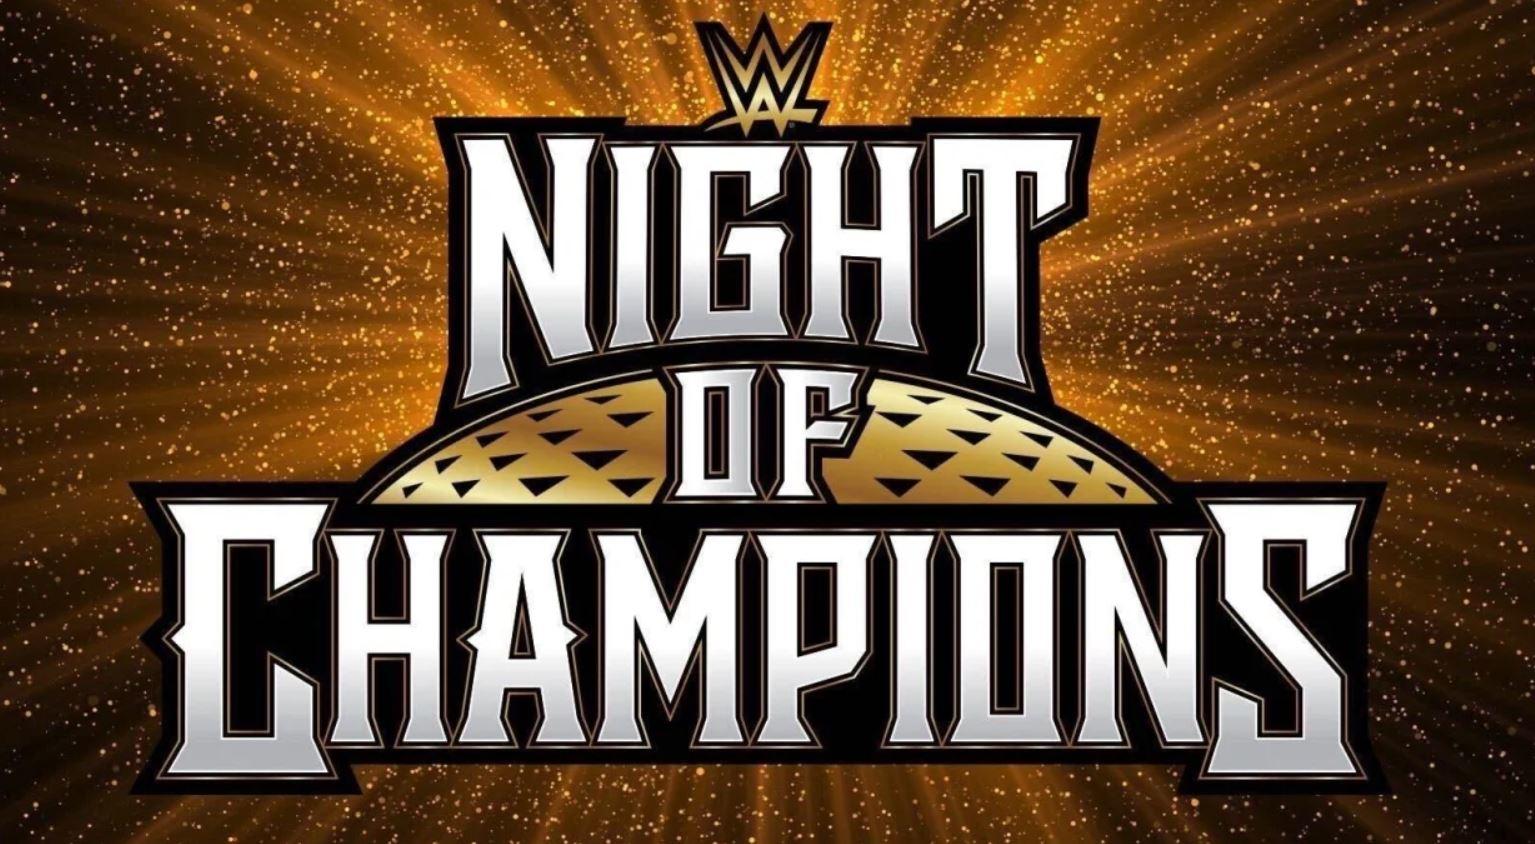 WWE NIGHT OF CHAMPIONS LOGO